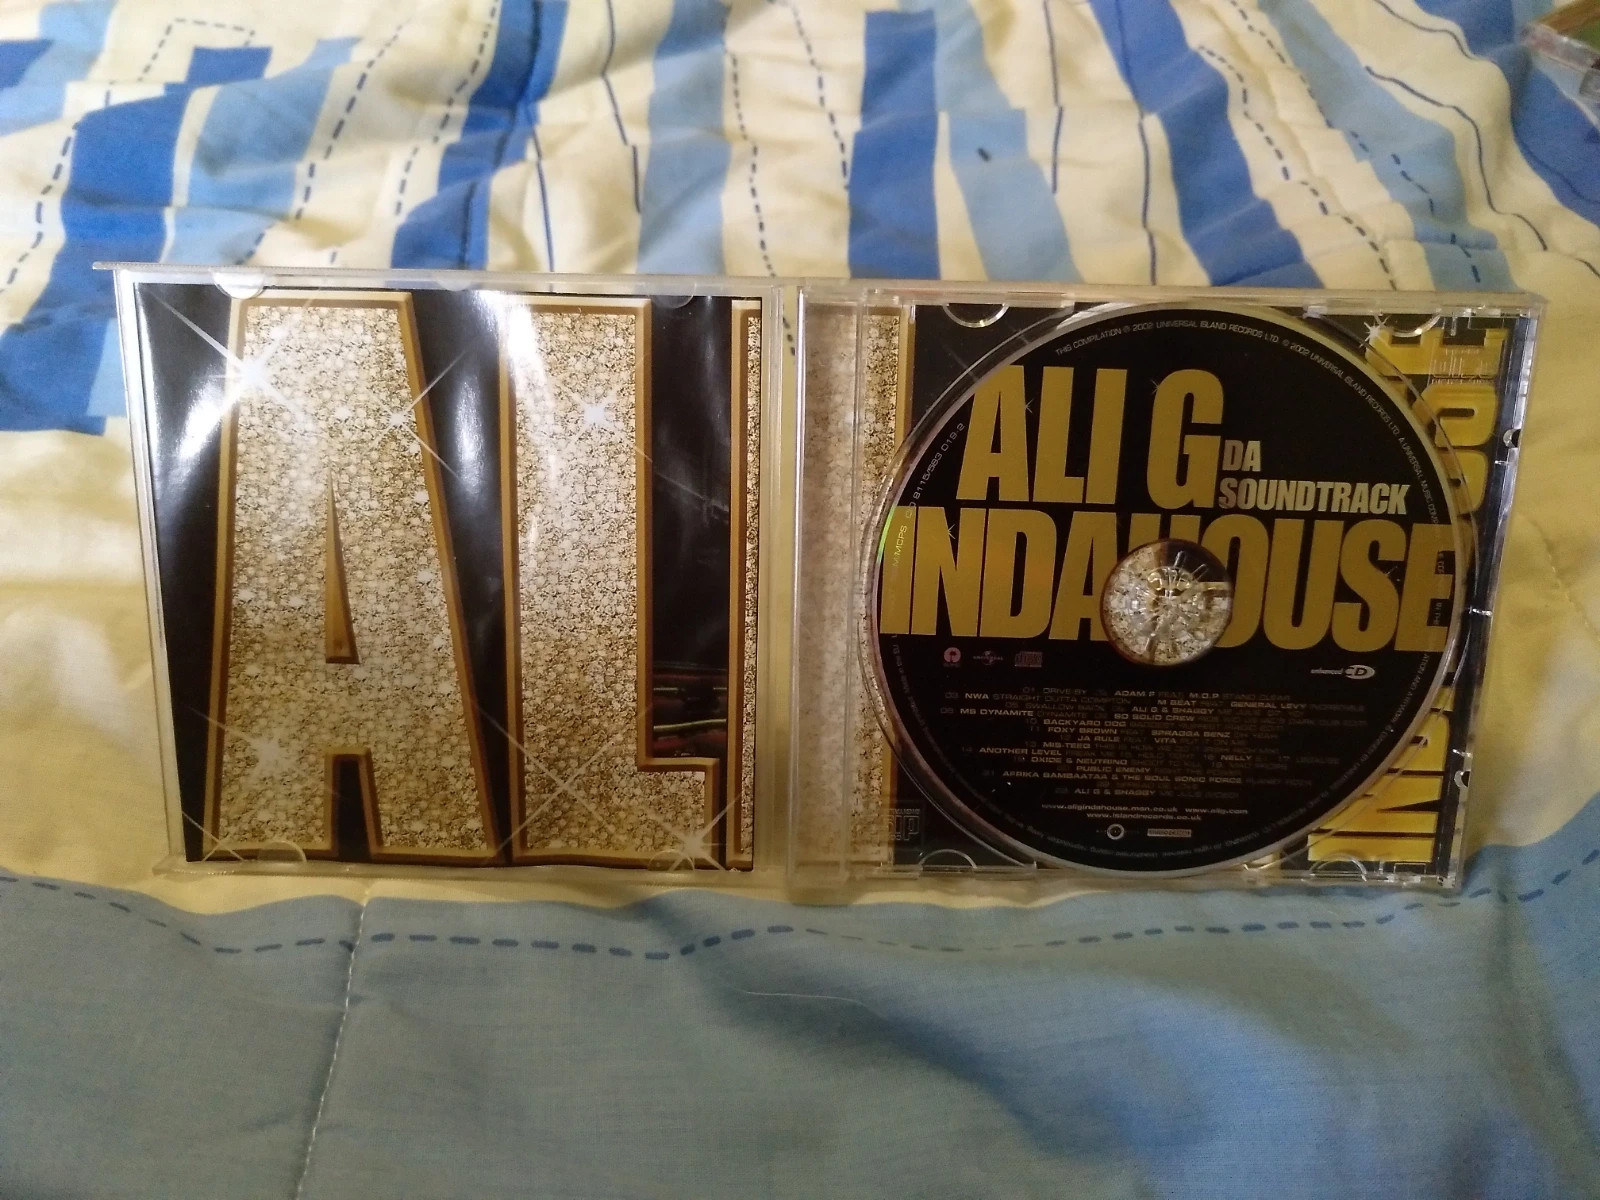 Ali G Indahouse Da Soundtrack - Wikipedia